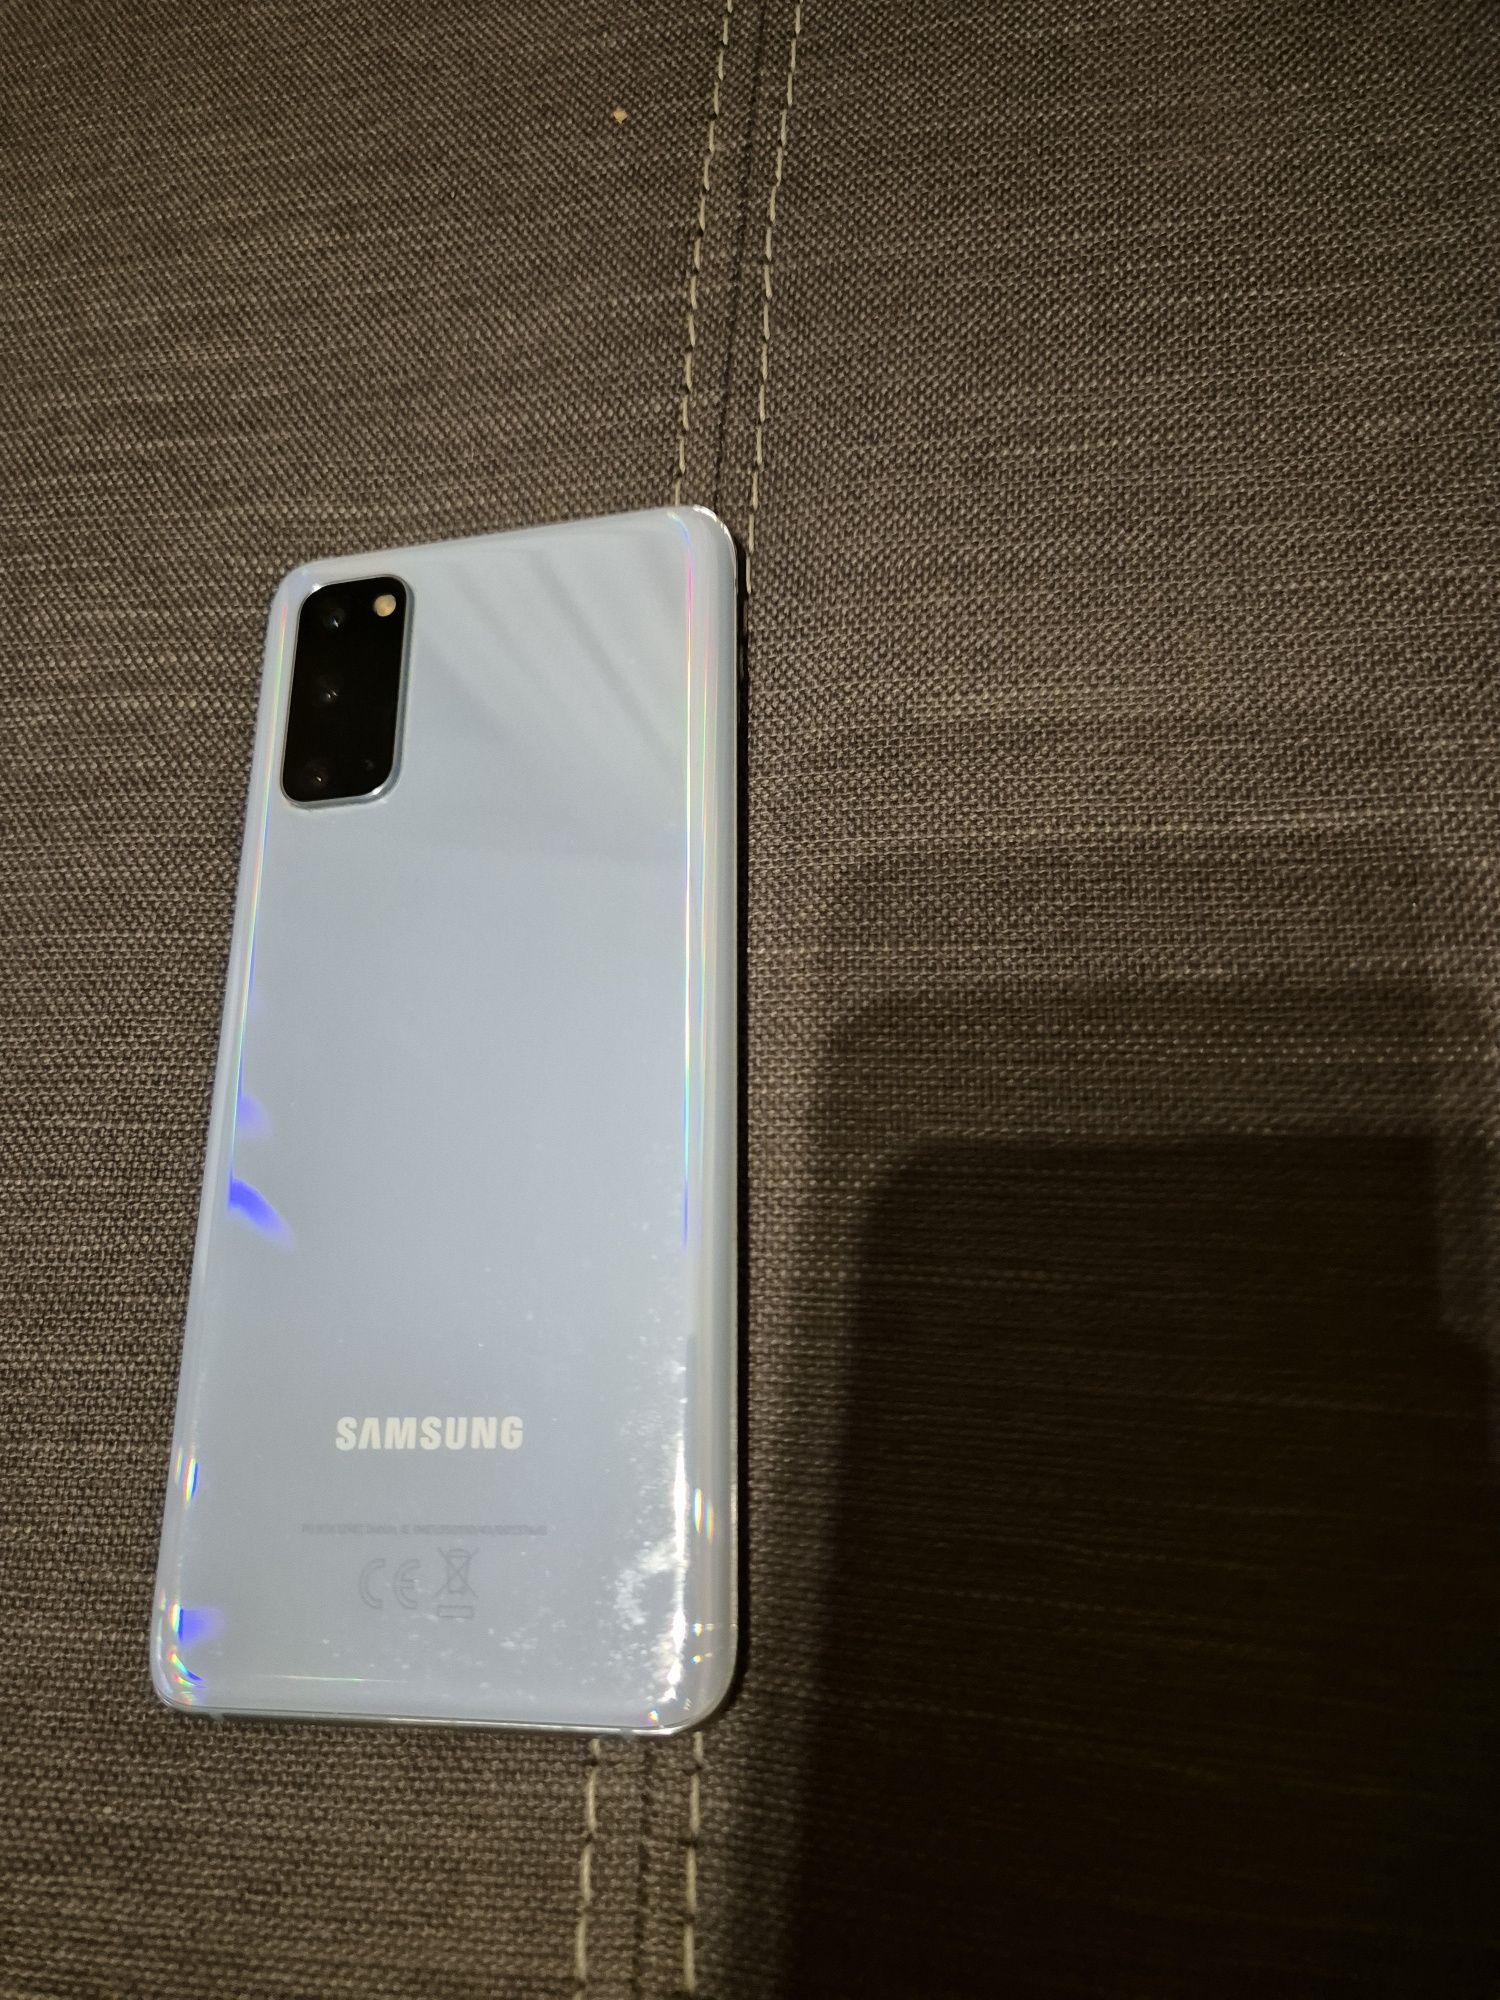 Samsung Galaxy S20, 8gb RAM, 128 gn ROM